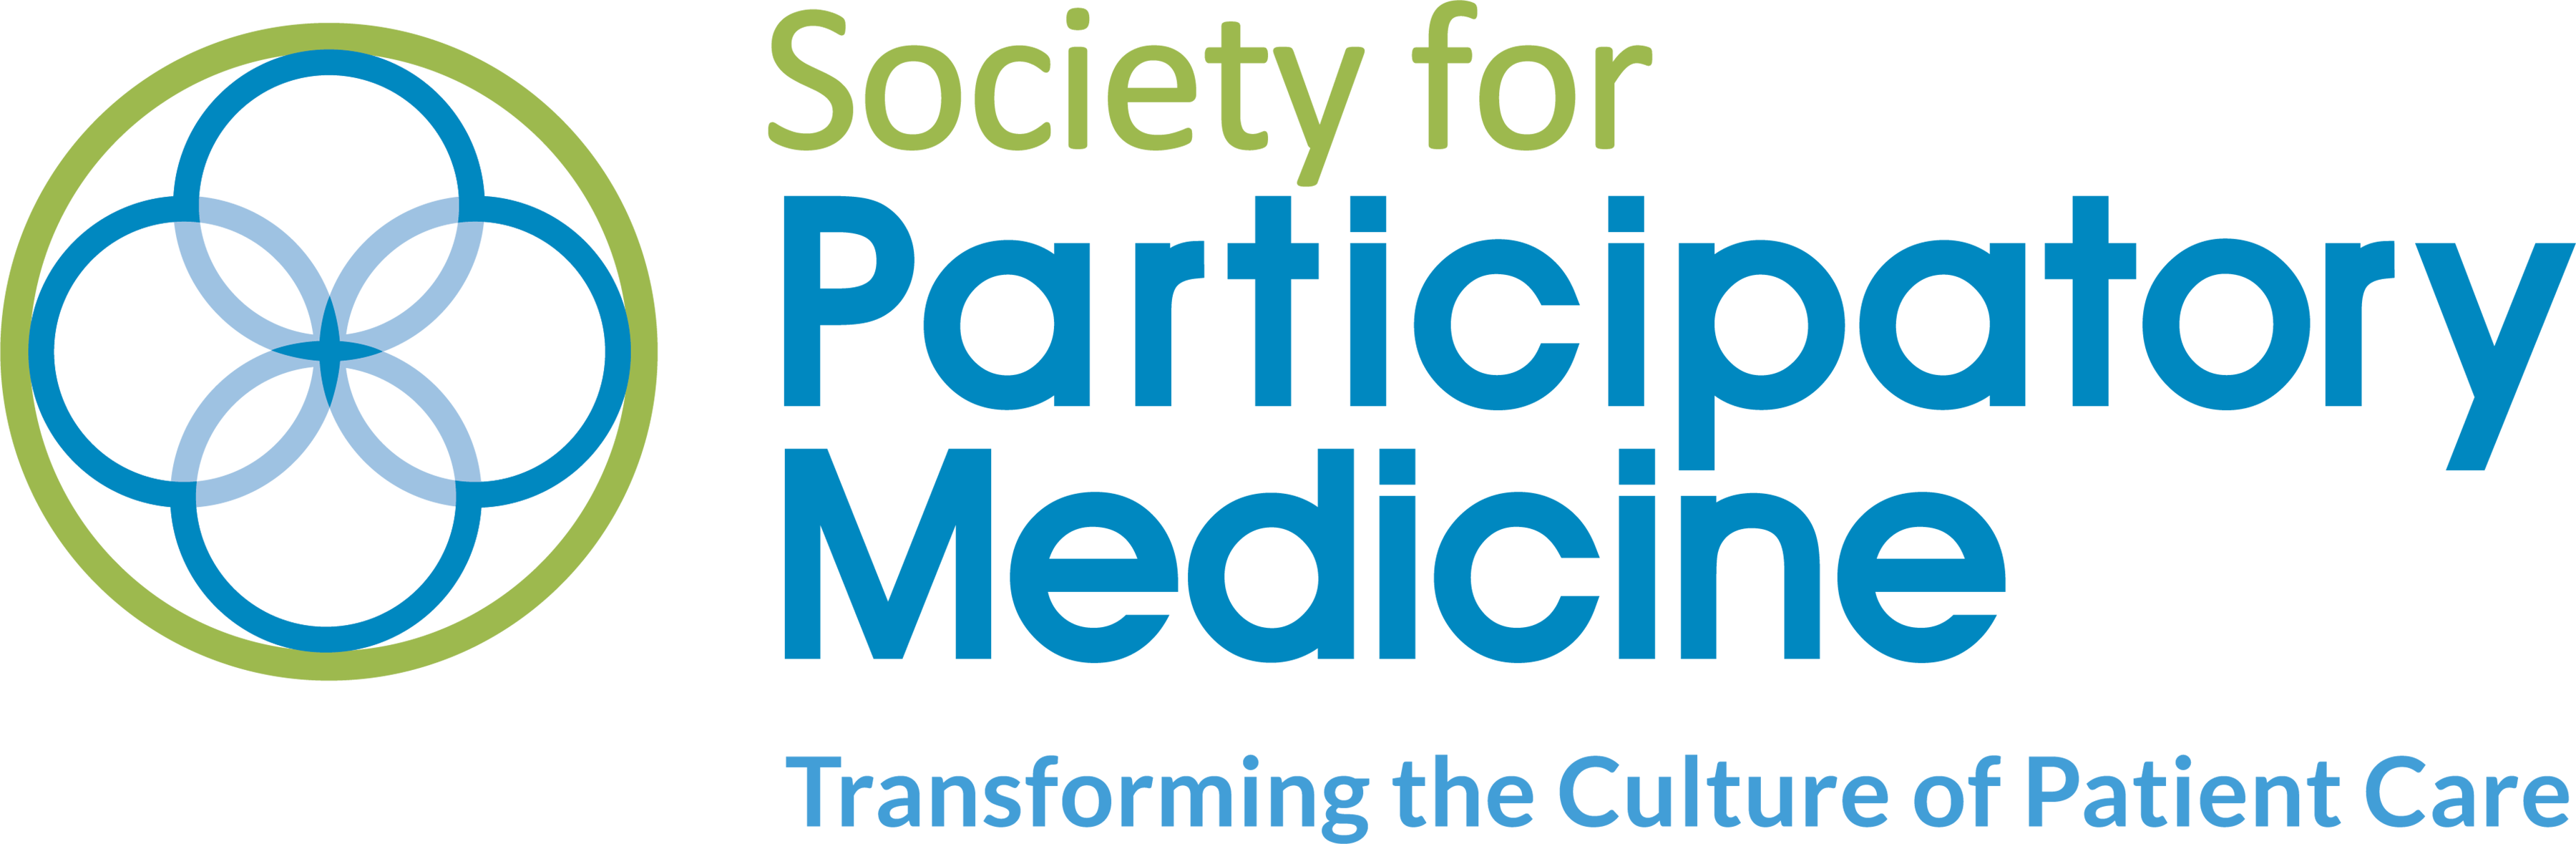 Journal of Participatory Medicine